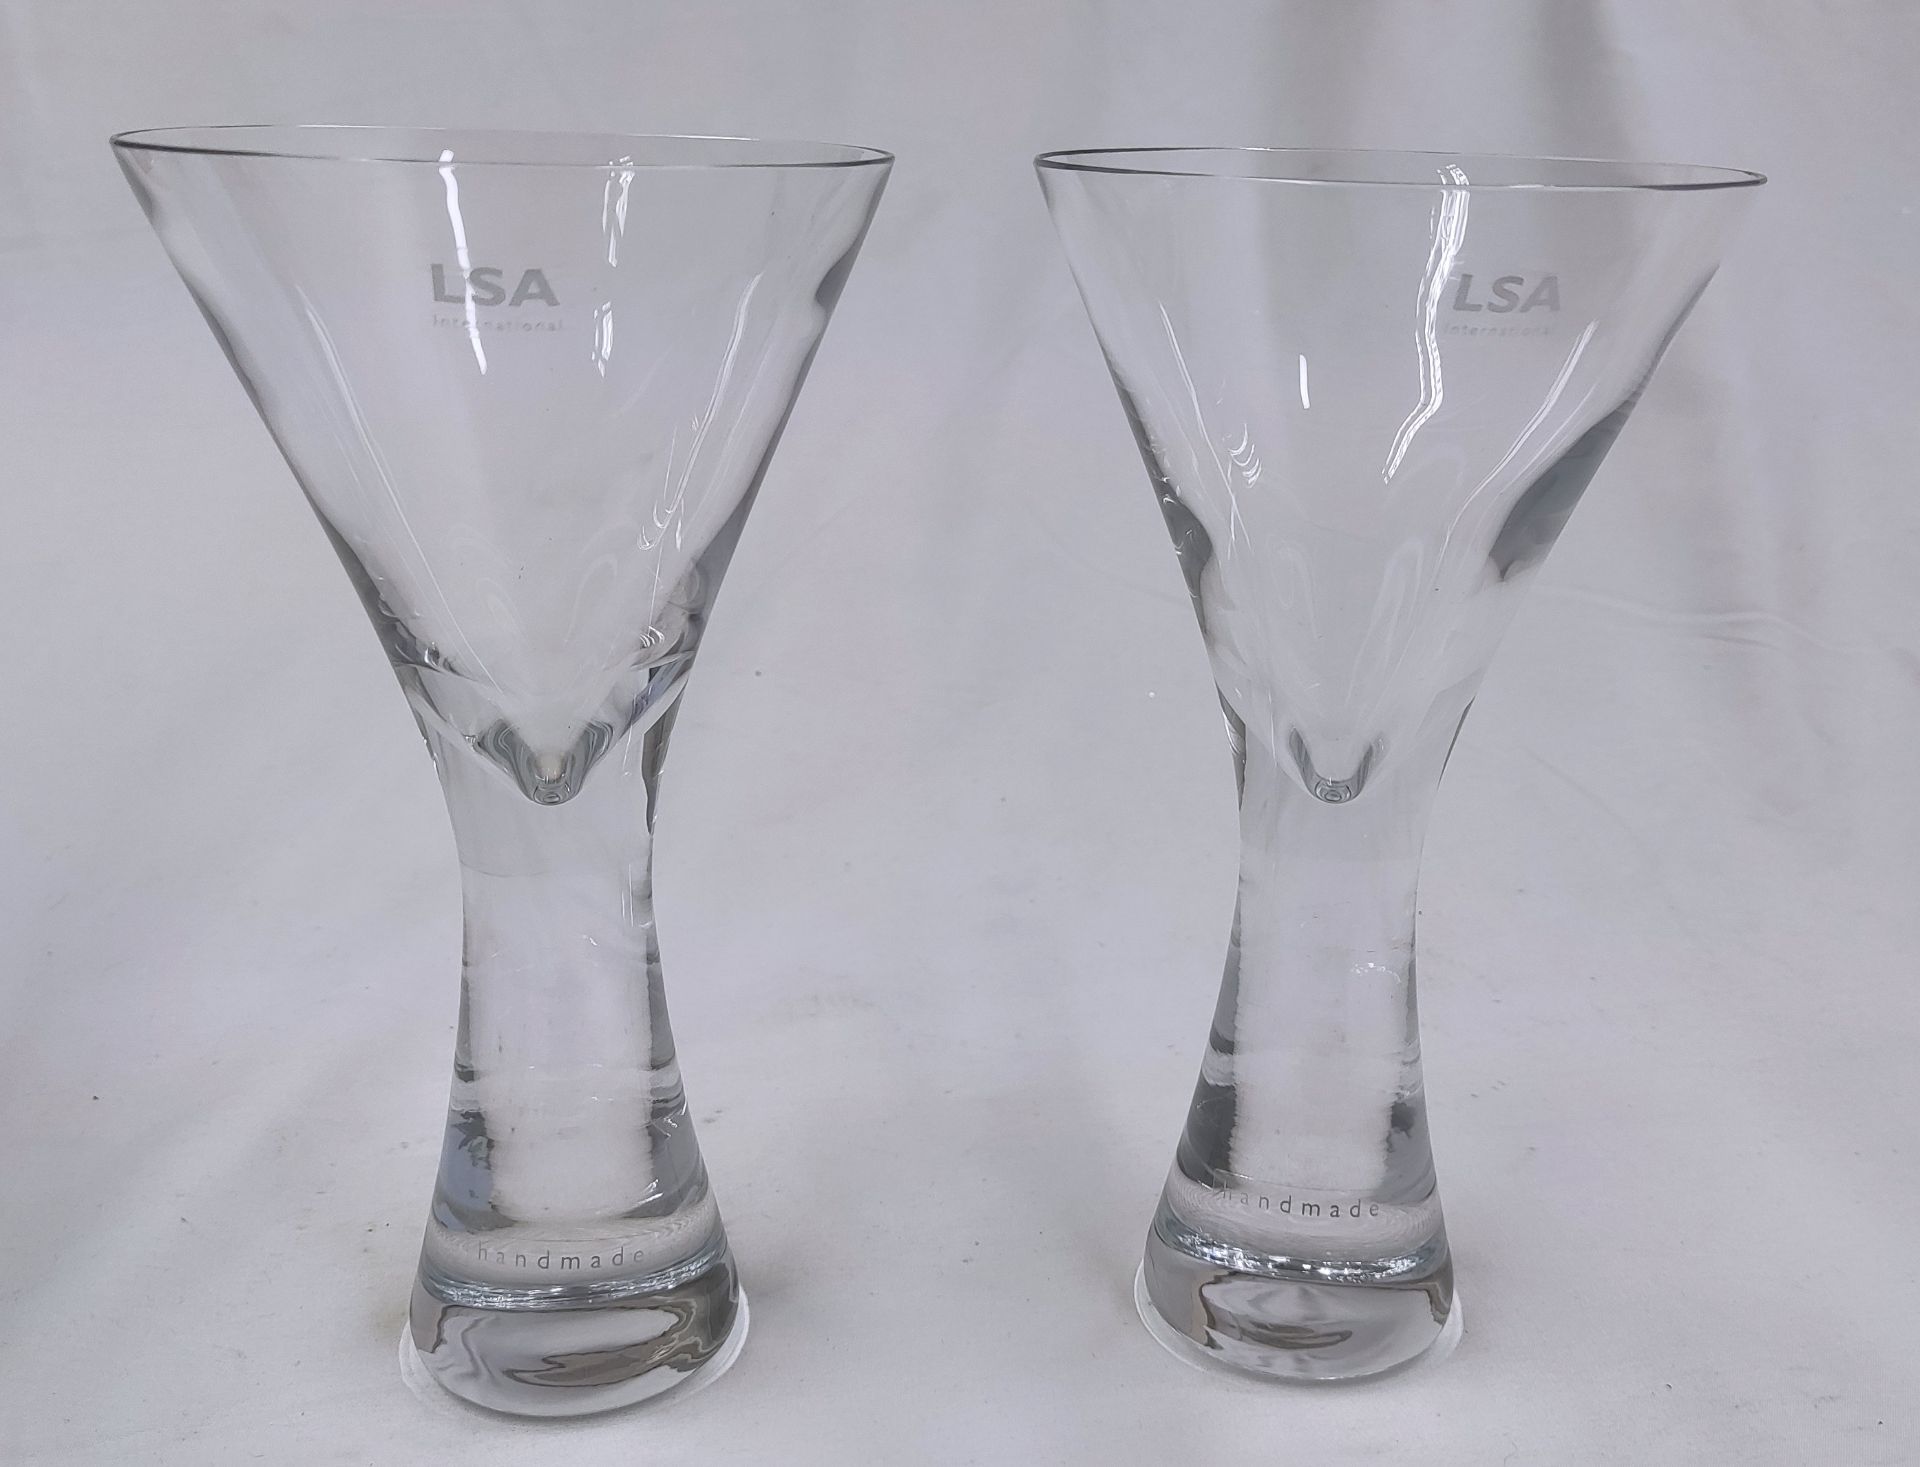 1 x LSA INTERNATIONAL 2 x Moya Wine Glasses - New/Boxed - Original RRP £59.99 - Image 8 of 13